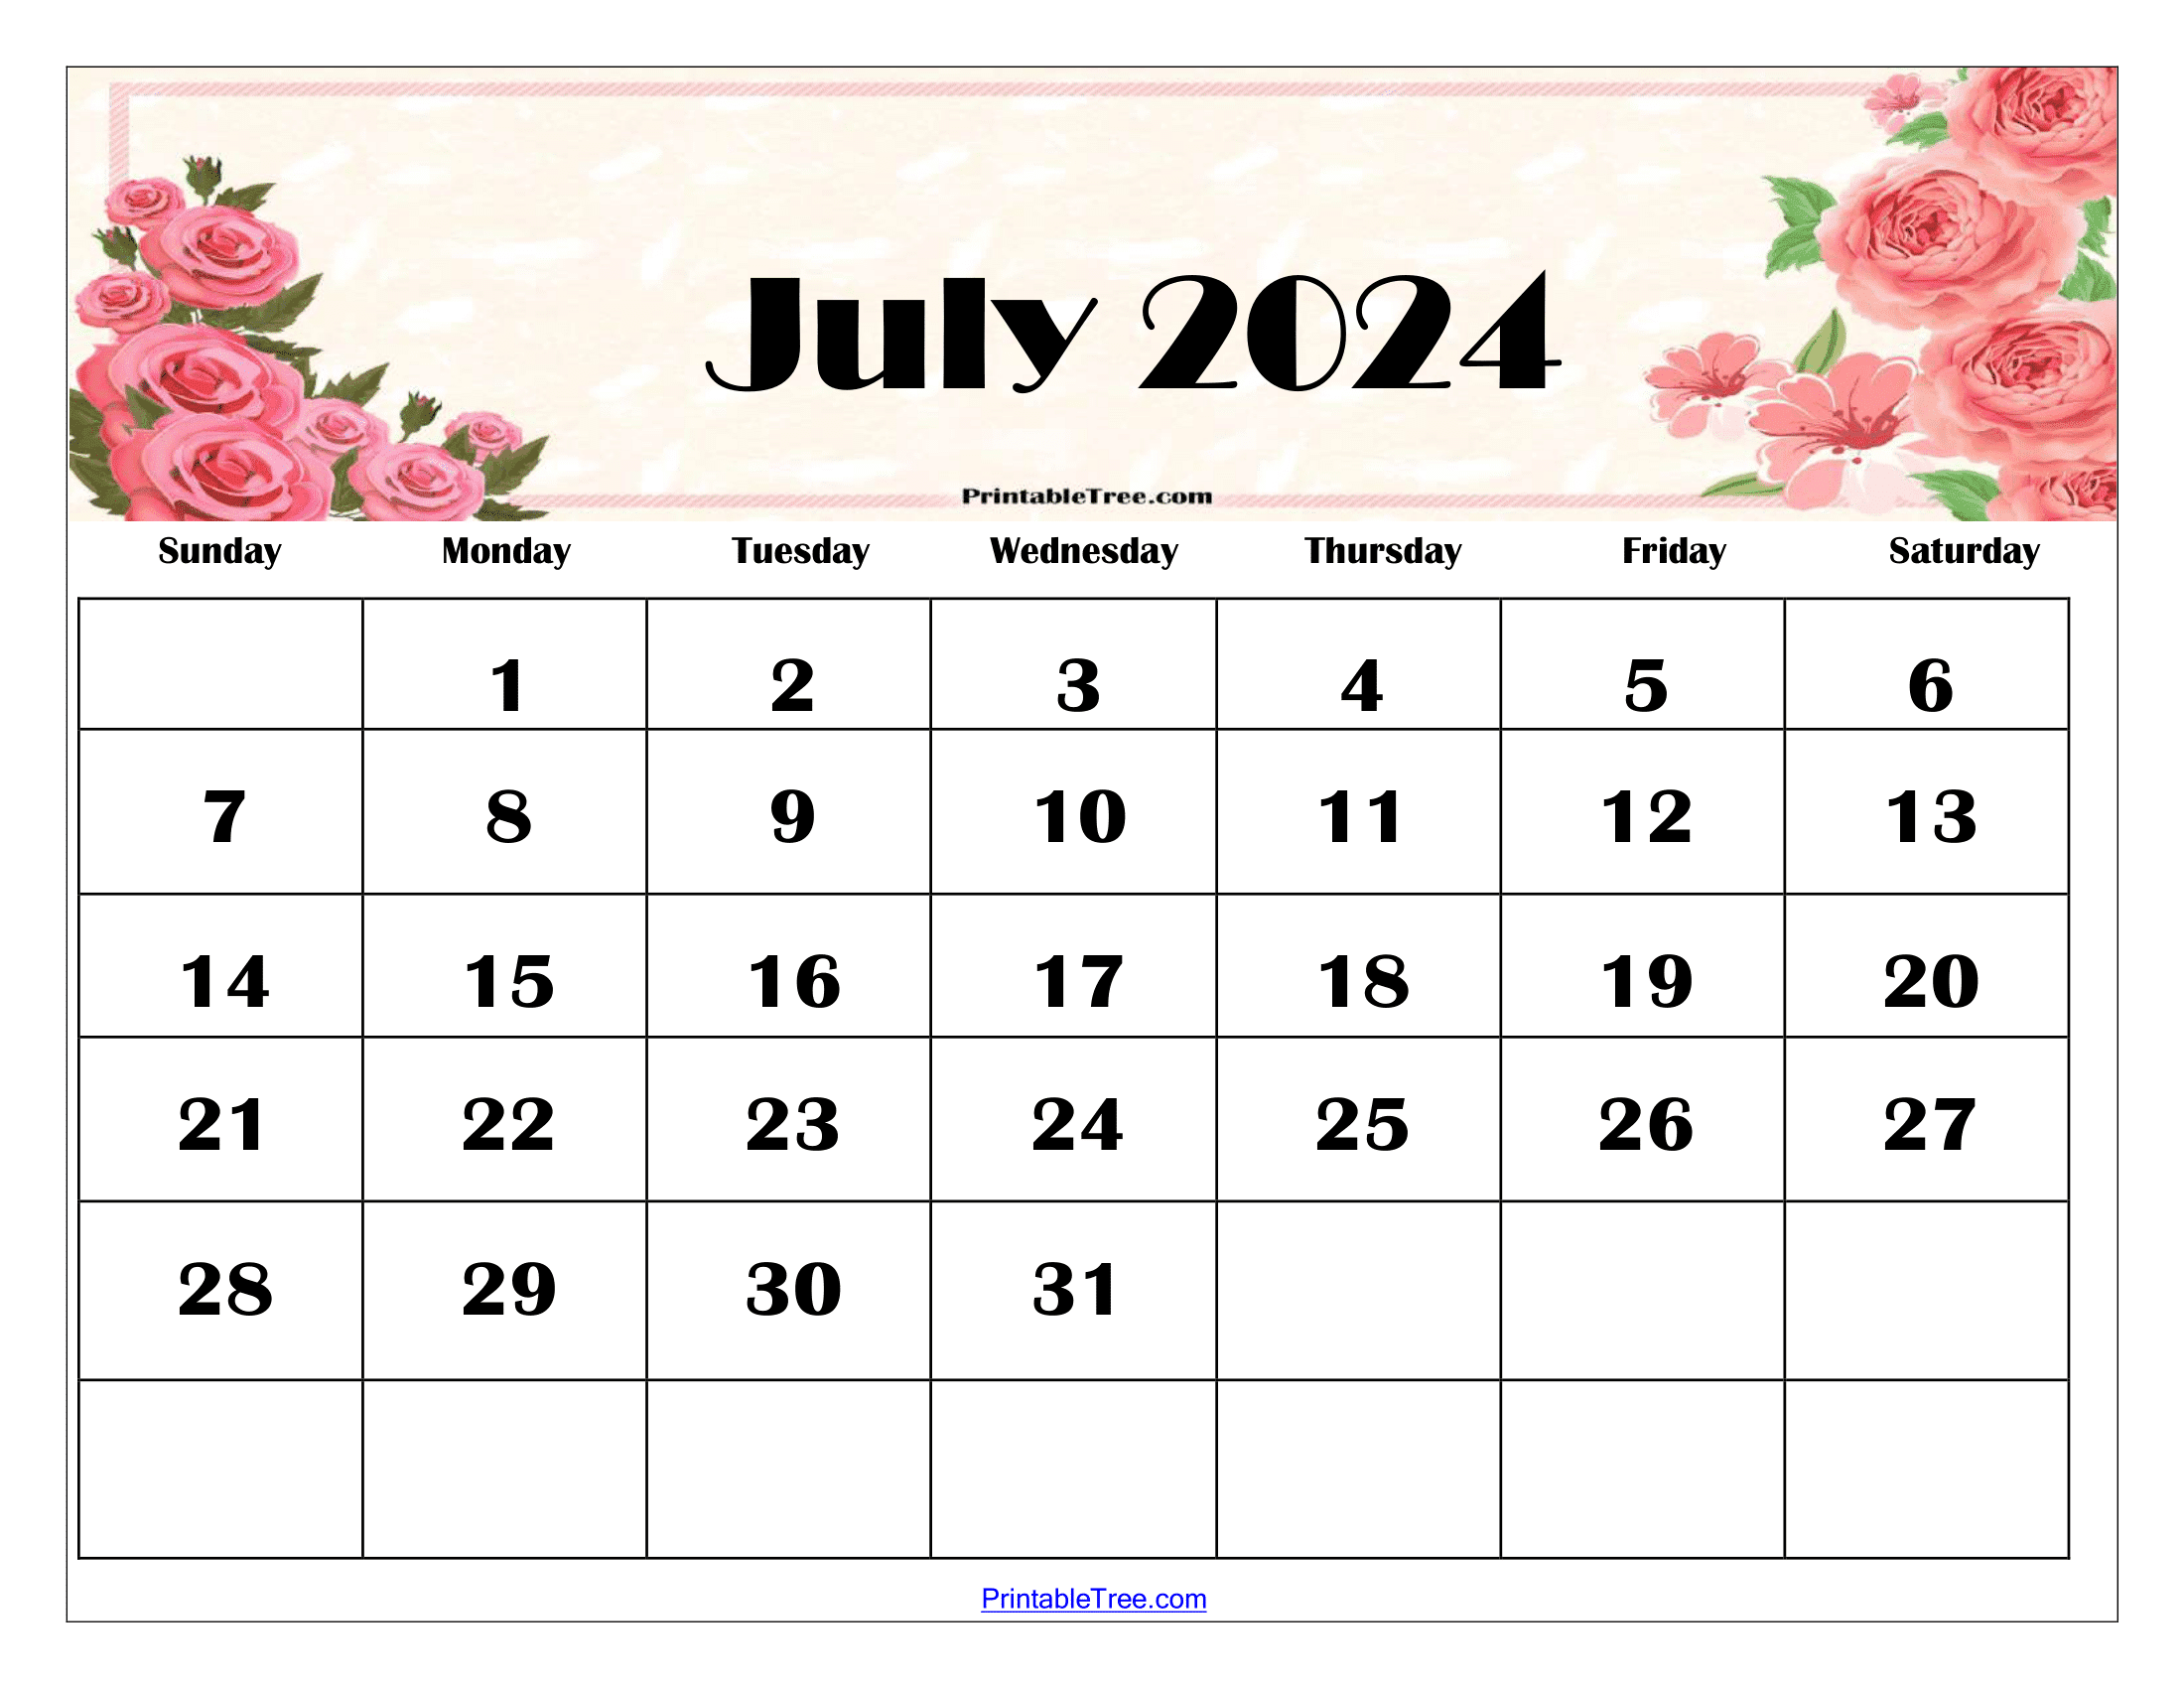 July 2024 Calendar Printable Pdf With Holidays Free Template for Printable July 2024 Calendar With Holidays